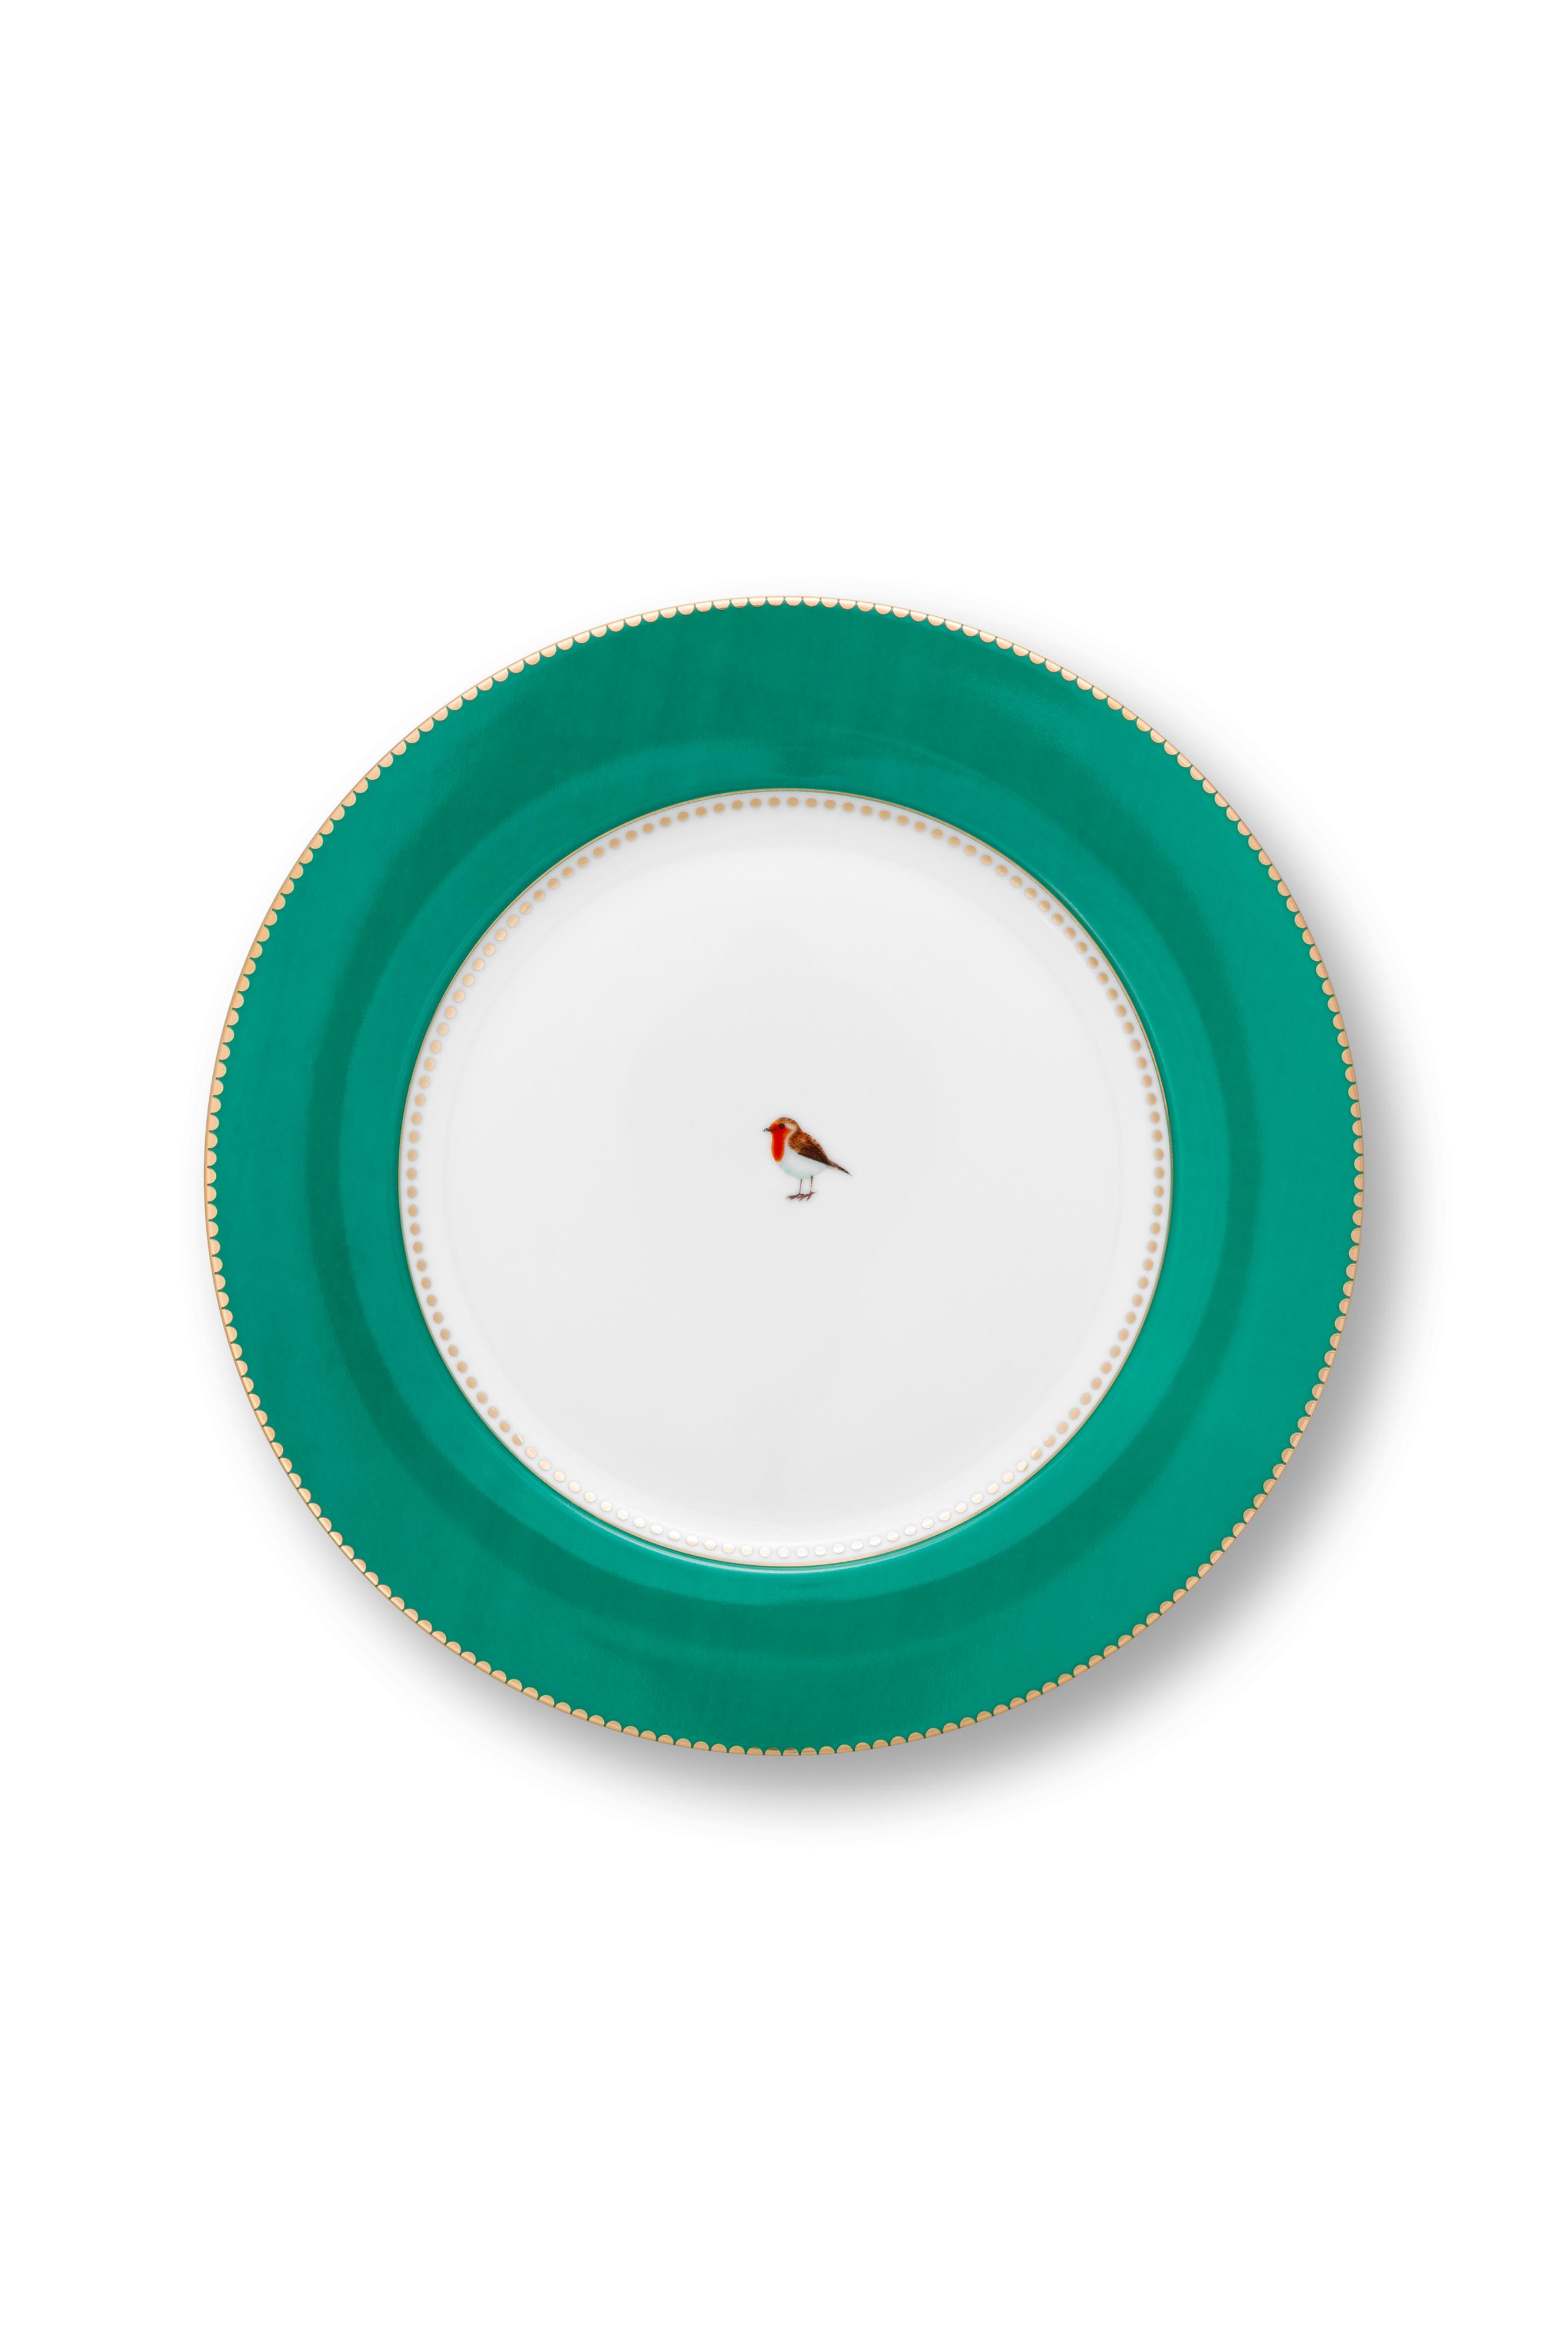 Plate Love Birds Emerald 26.5cm Gift